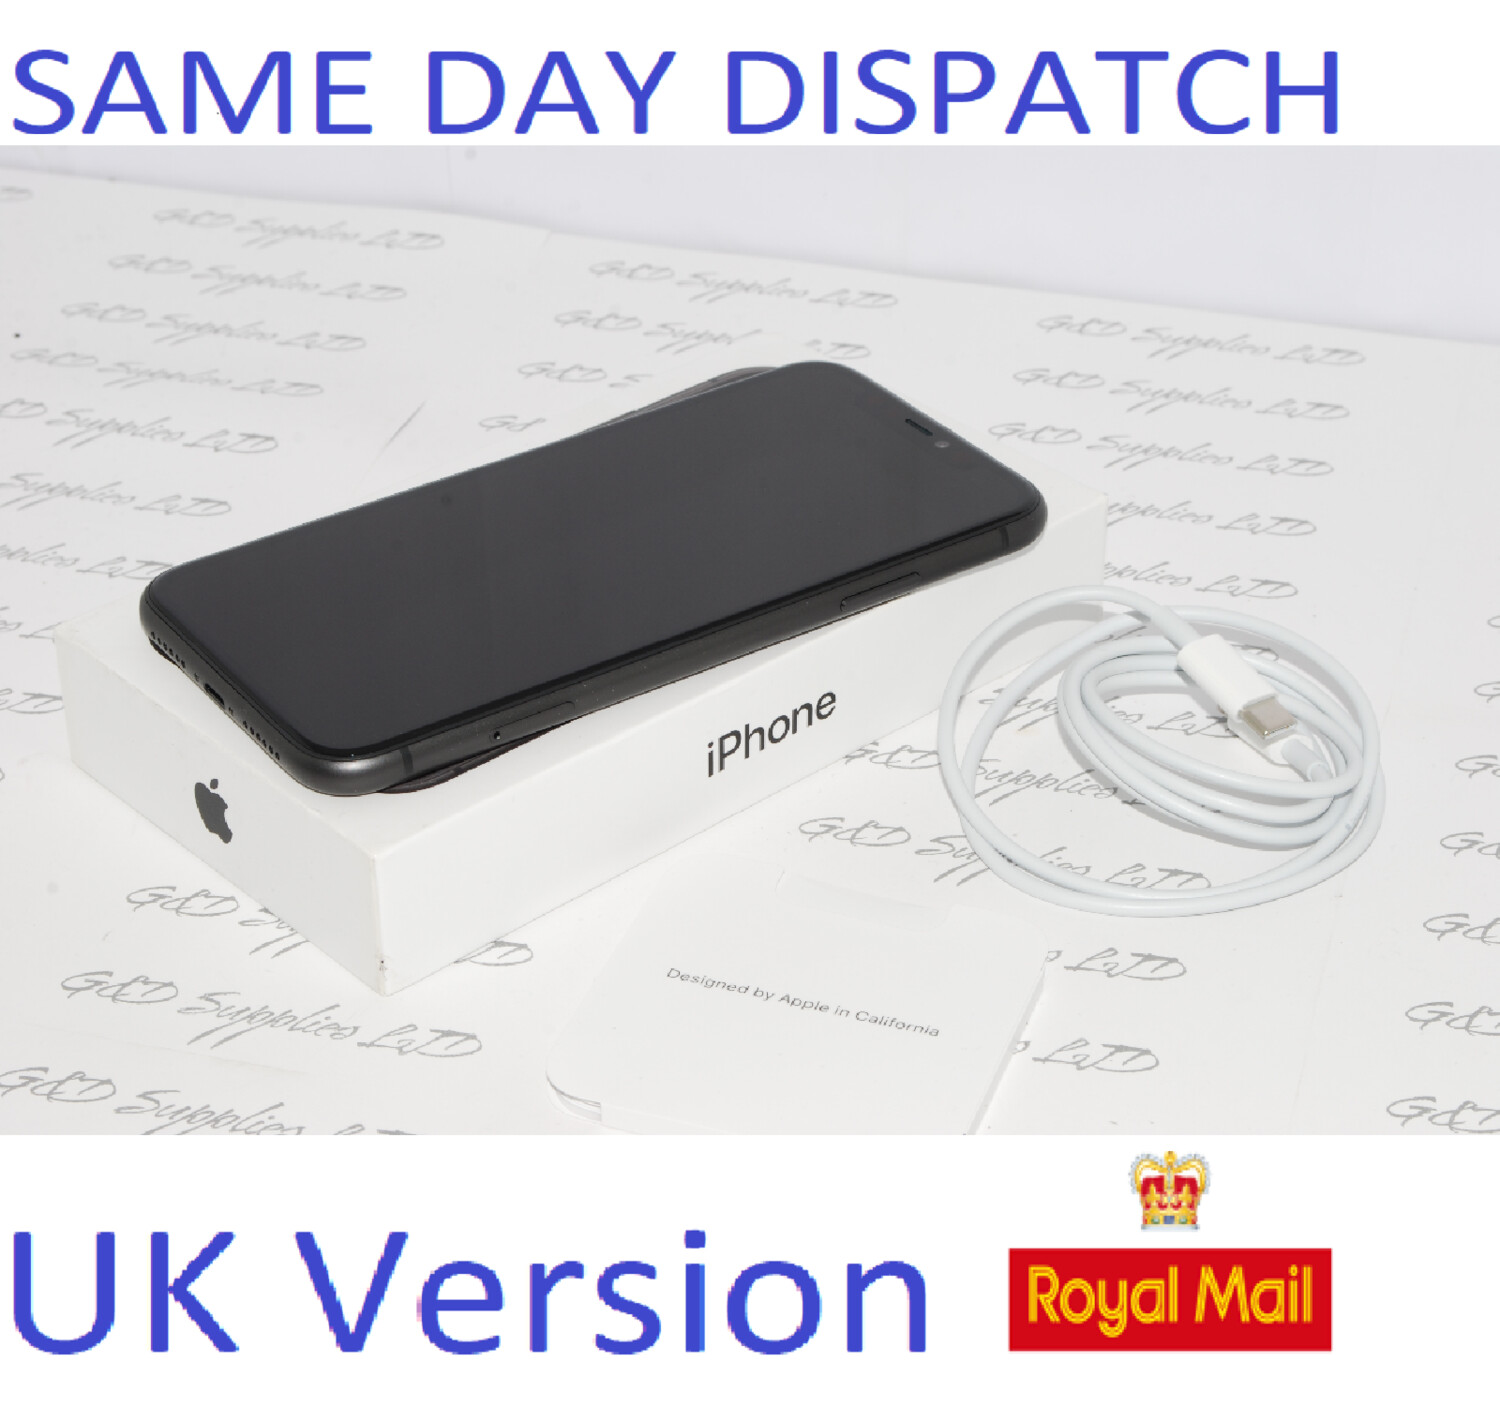 # Apple iPhone 11 64GB Mobile unlocked sim-free BLACK UK Version